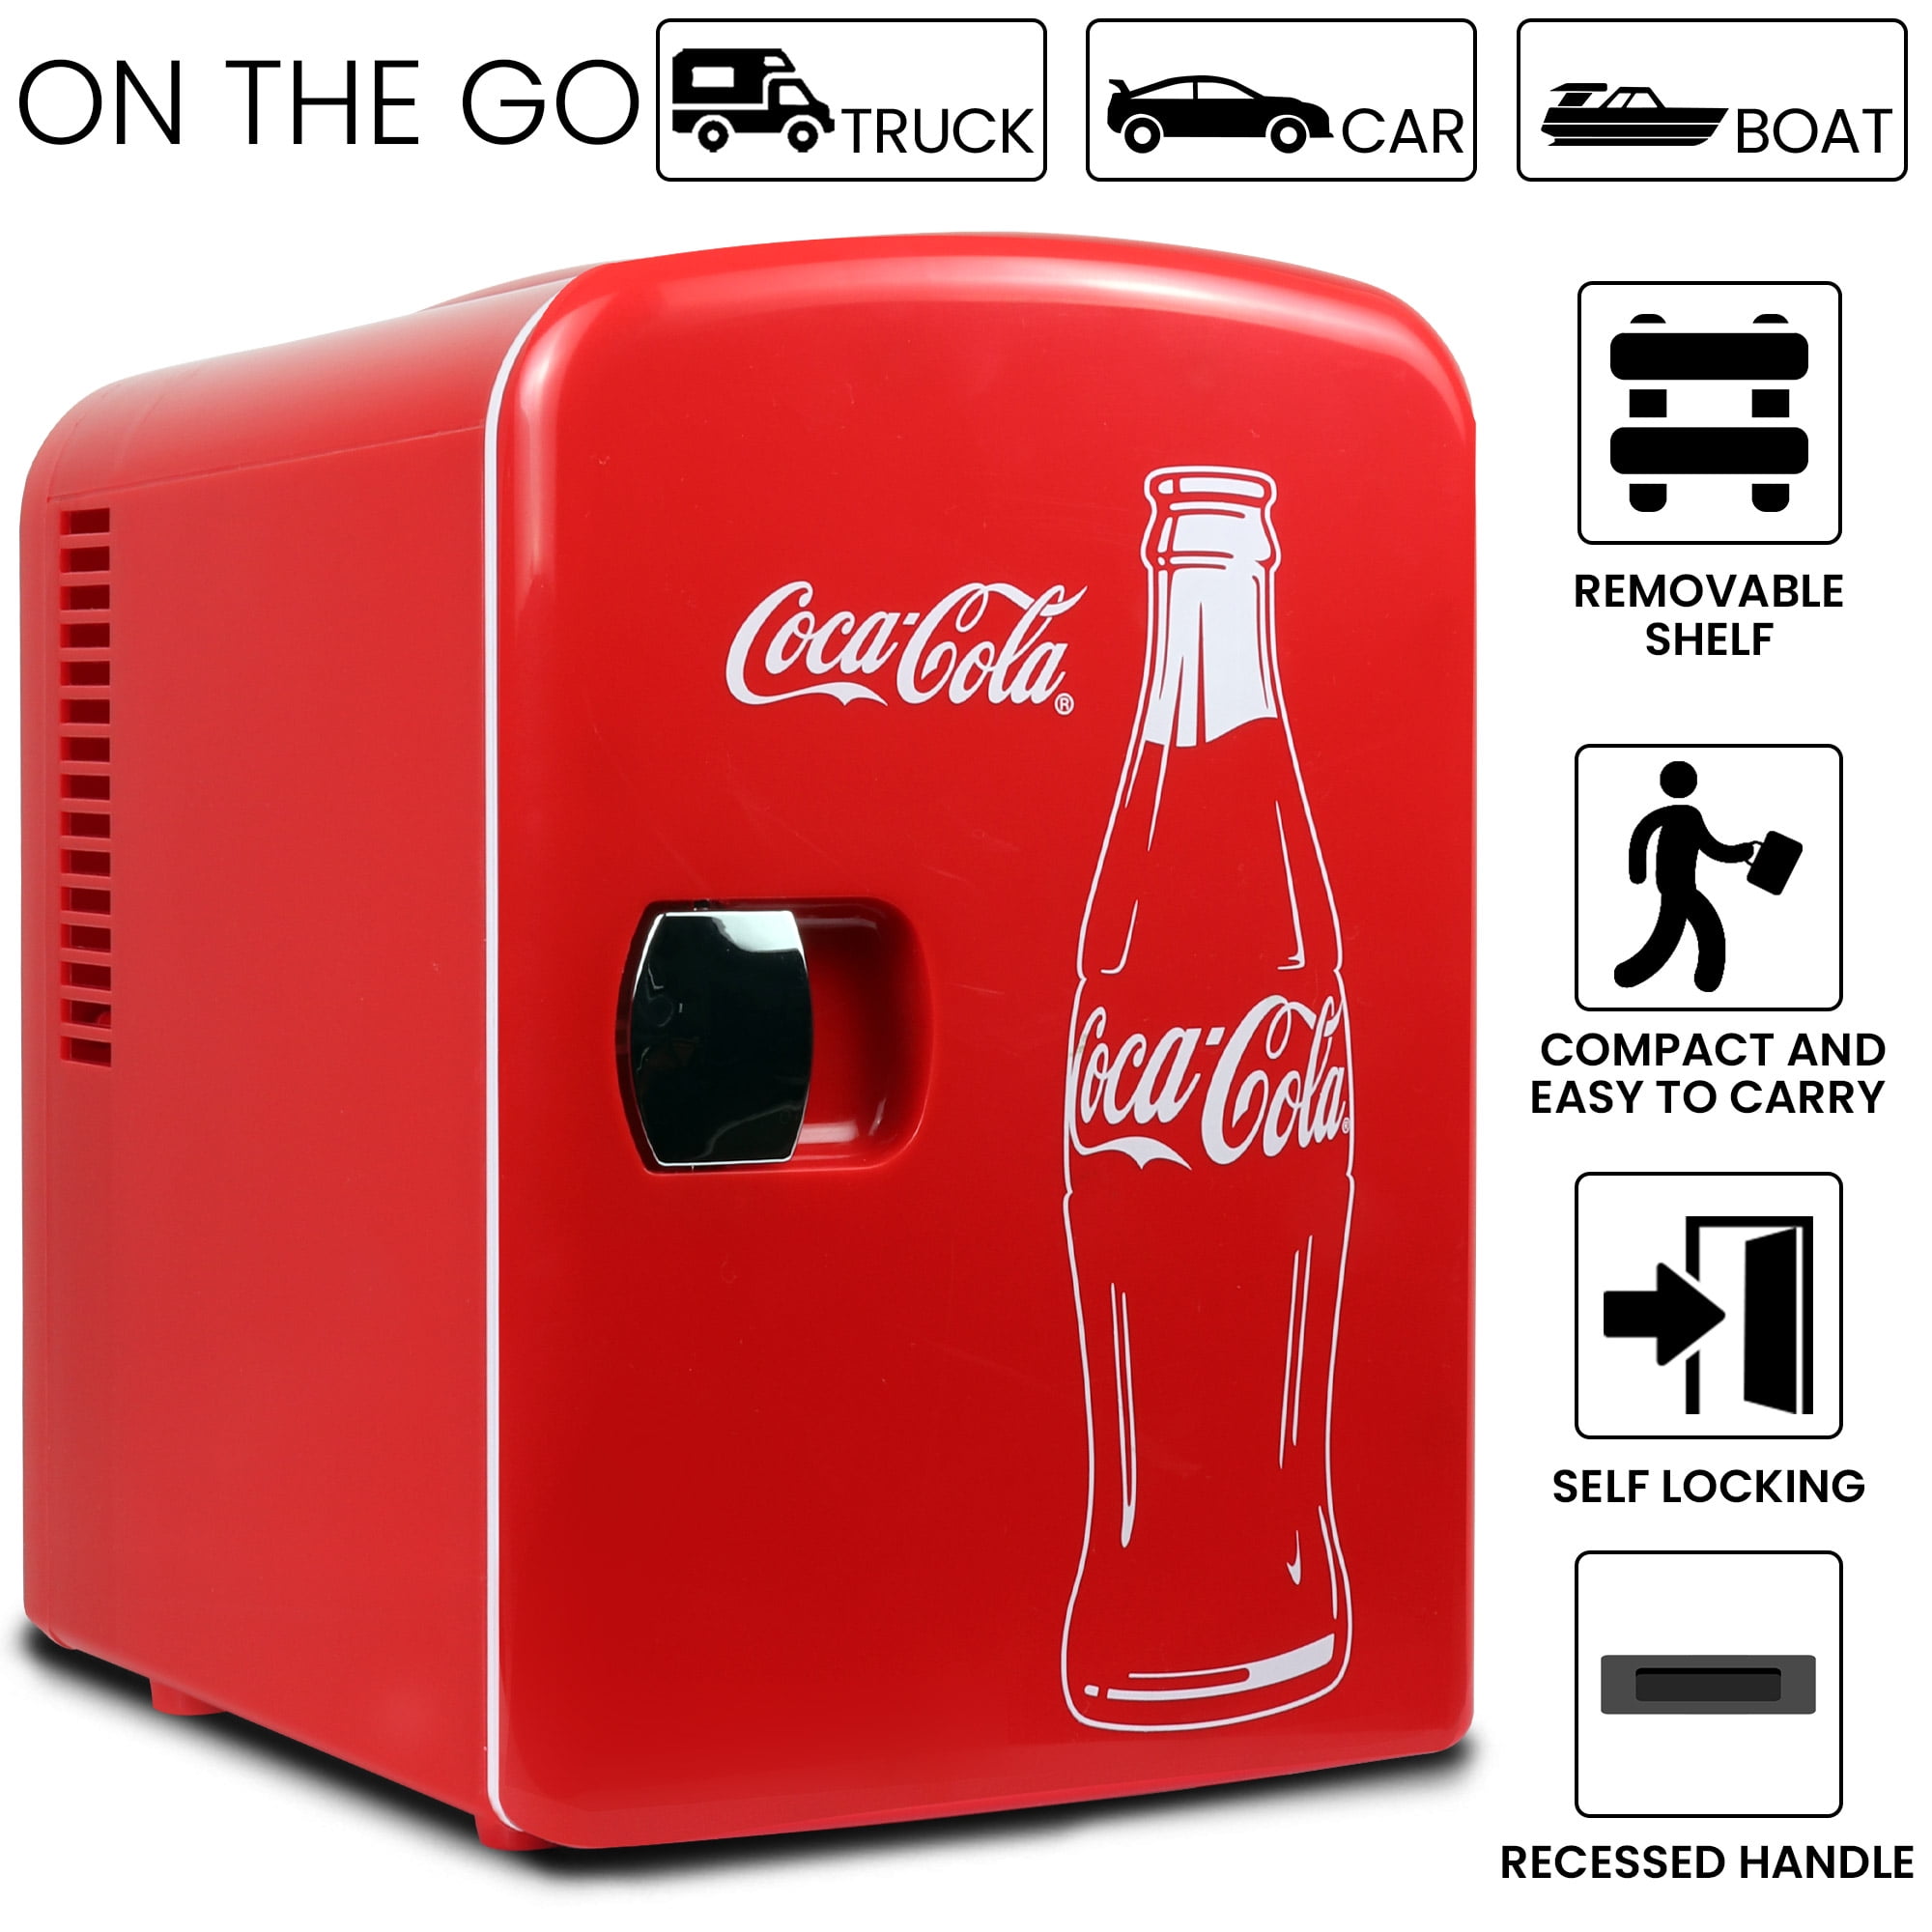 modèle 3D de Mini-frigo Coca-Cola - TurboSquid 1644541